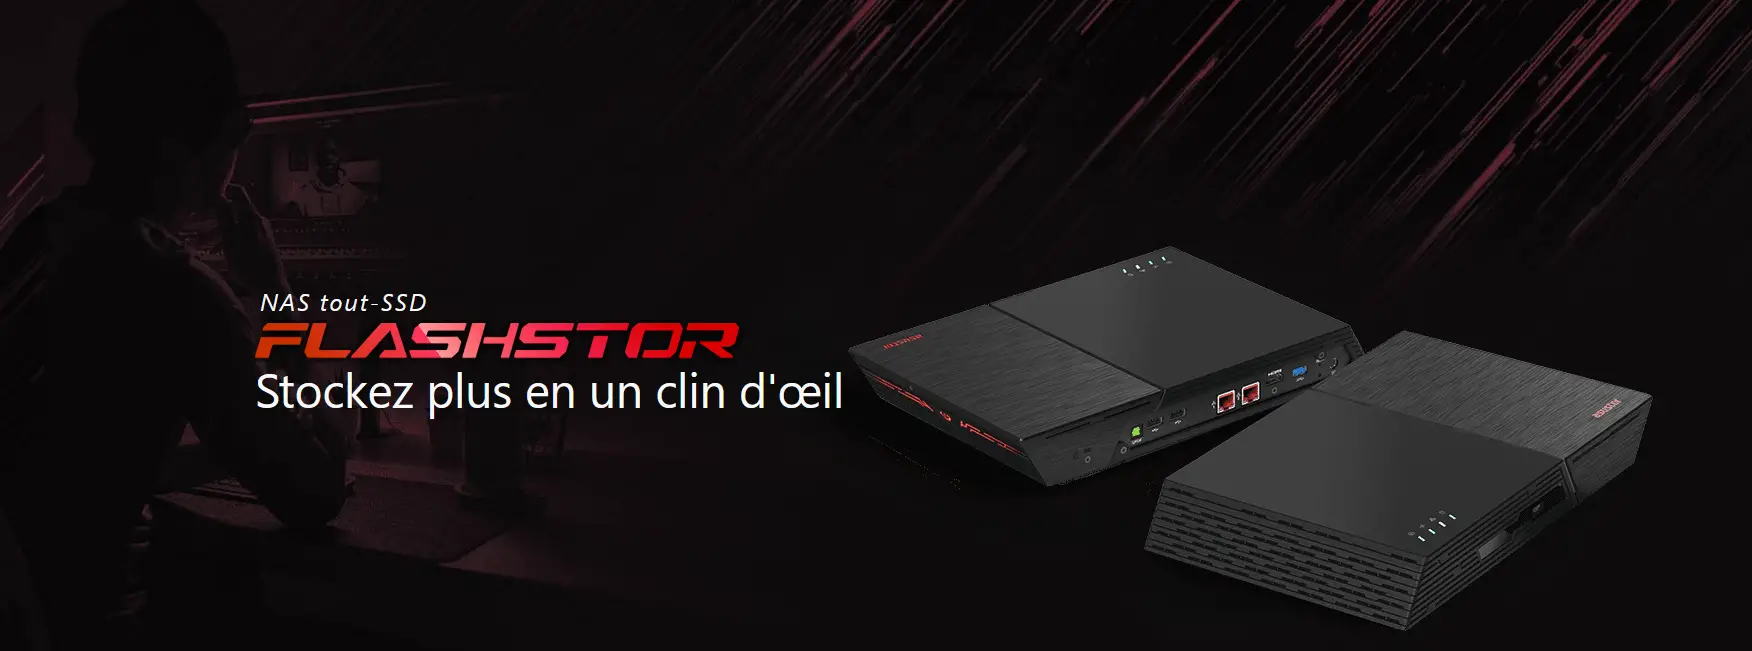 Asustor Flashstor 6 NAS SSD M.2 6 baies